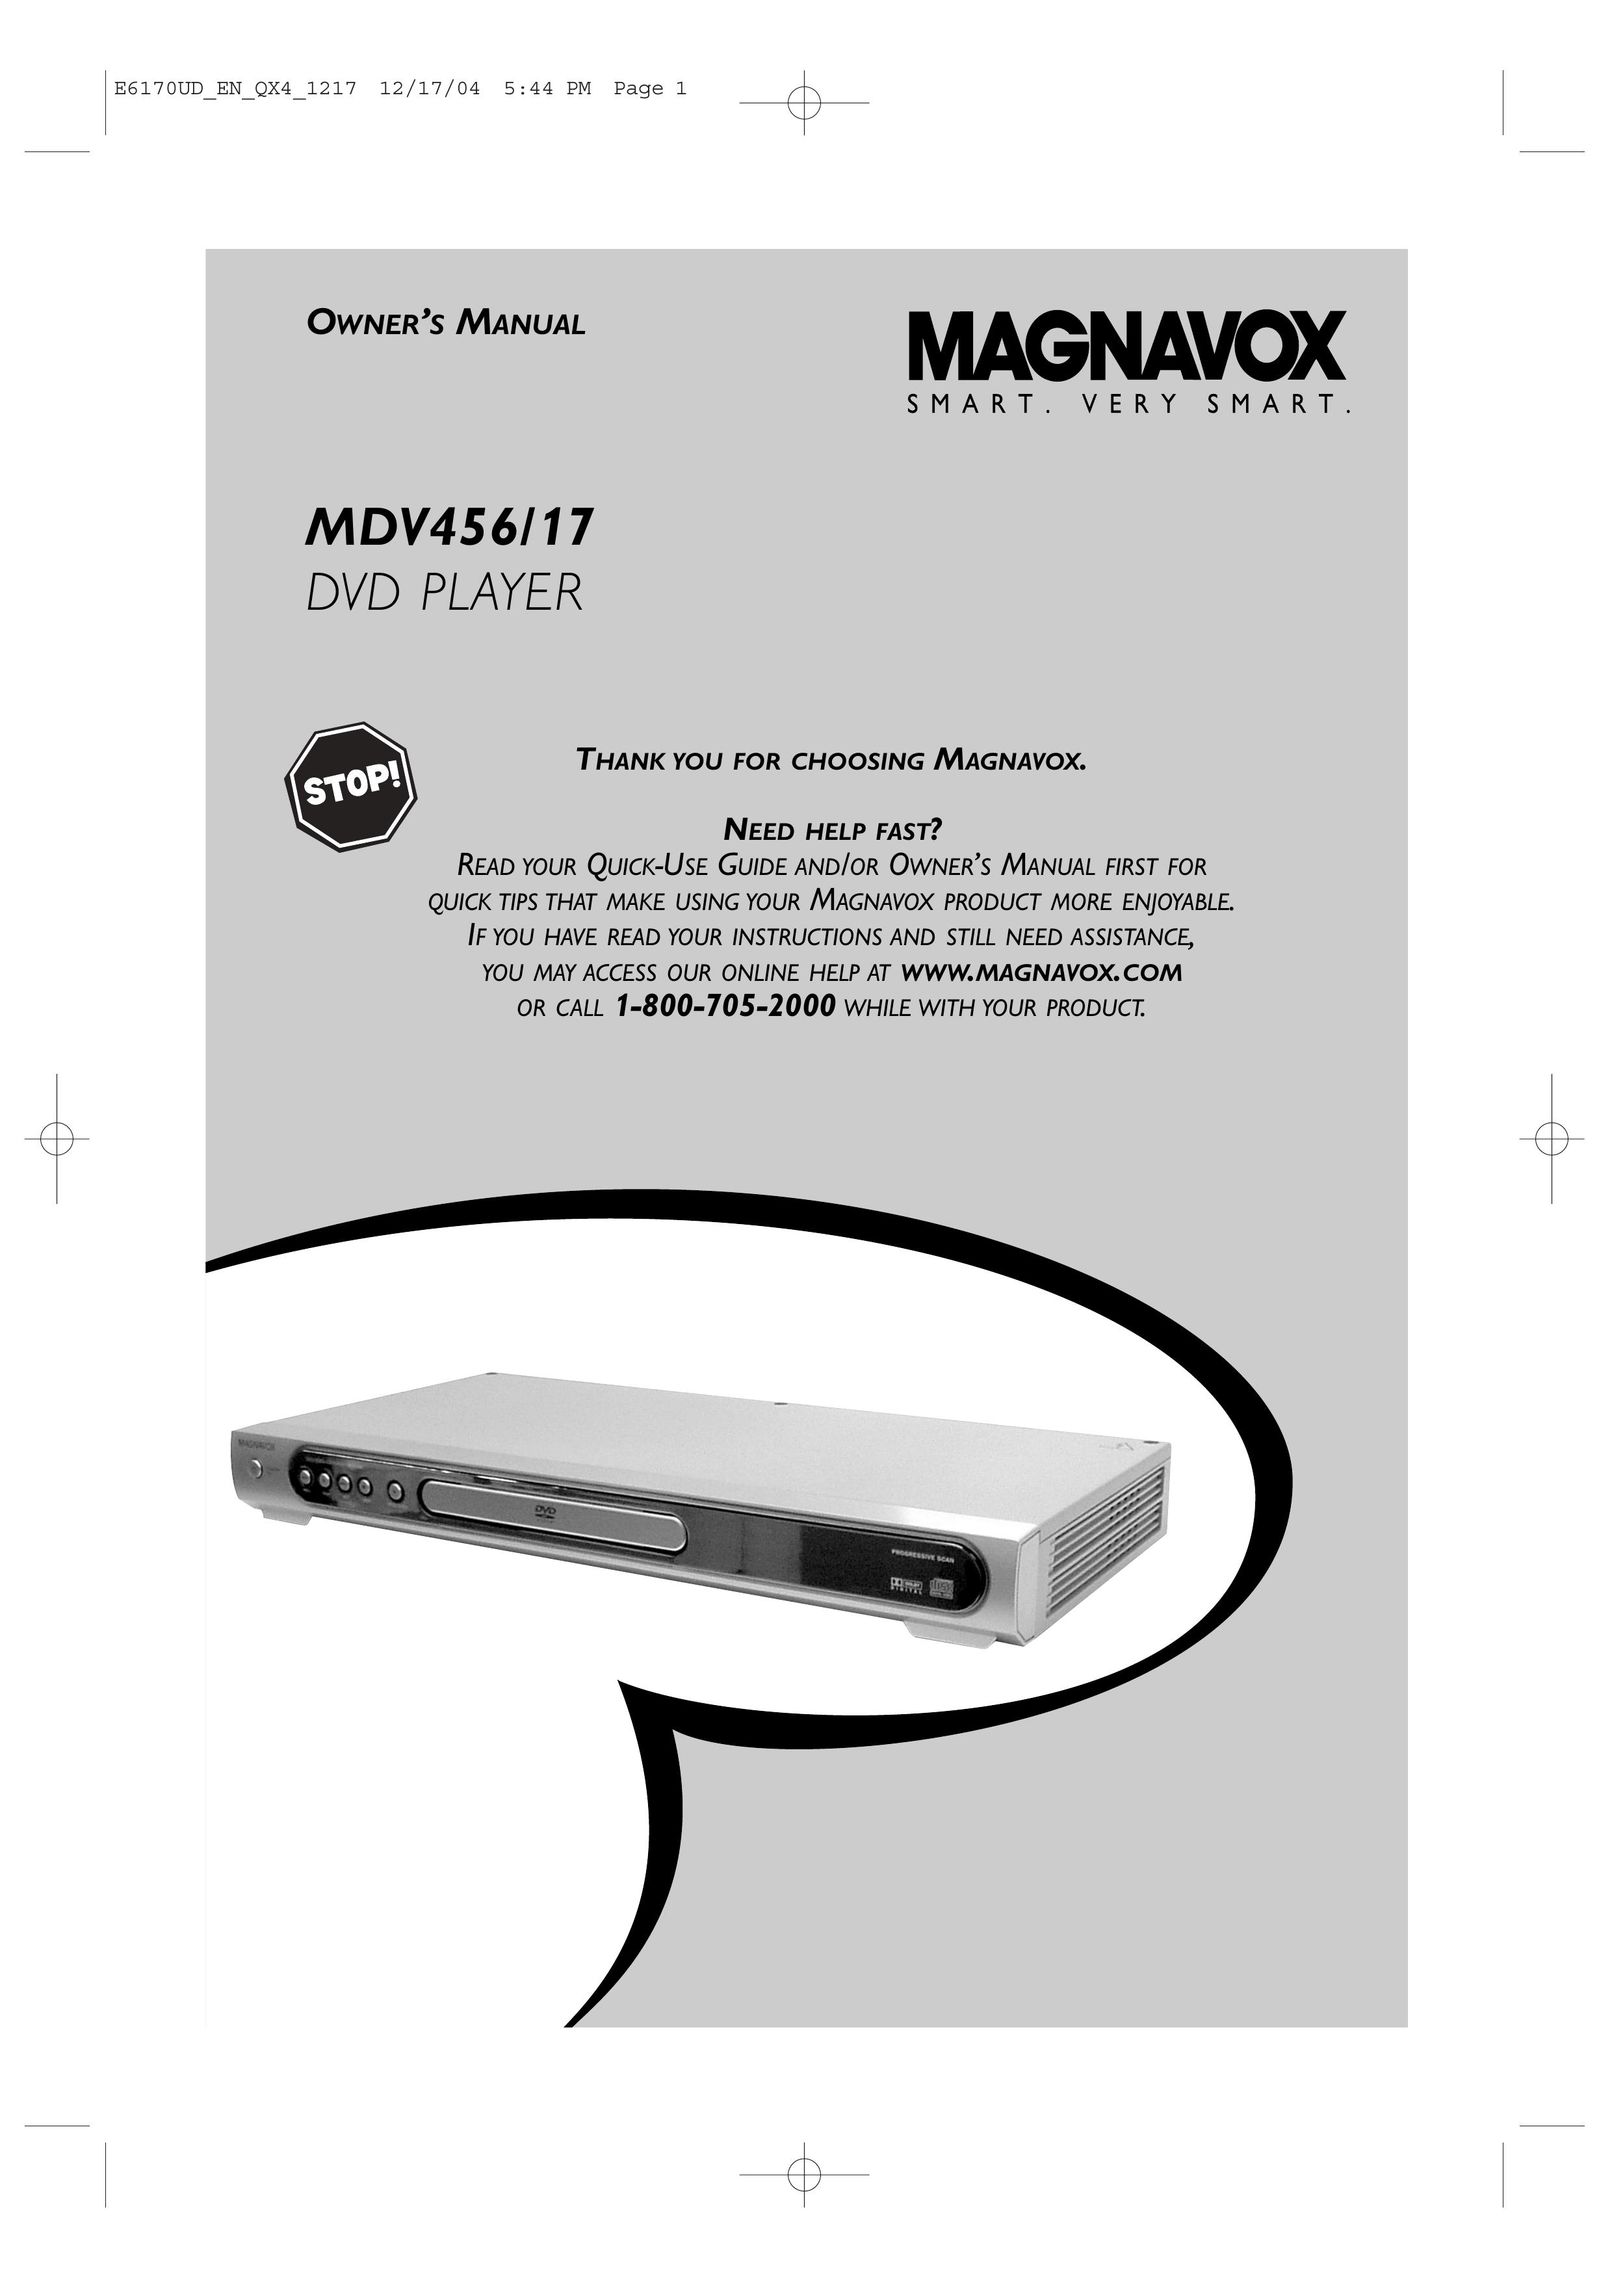 Magnavox MDV456/17 DVD Player User Manual